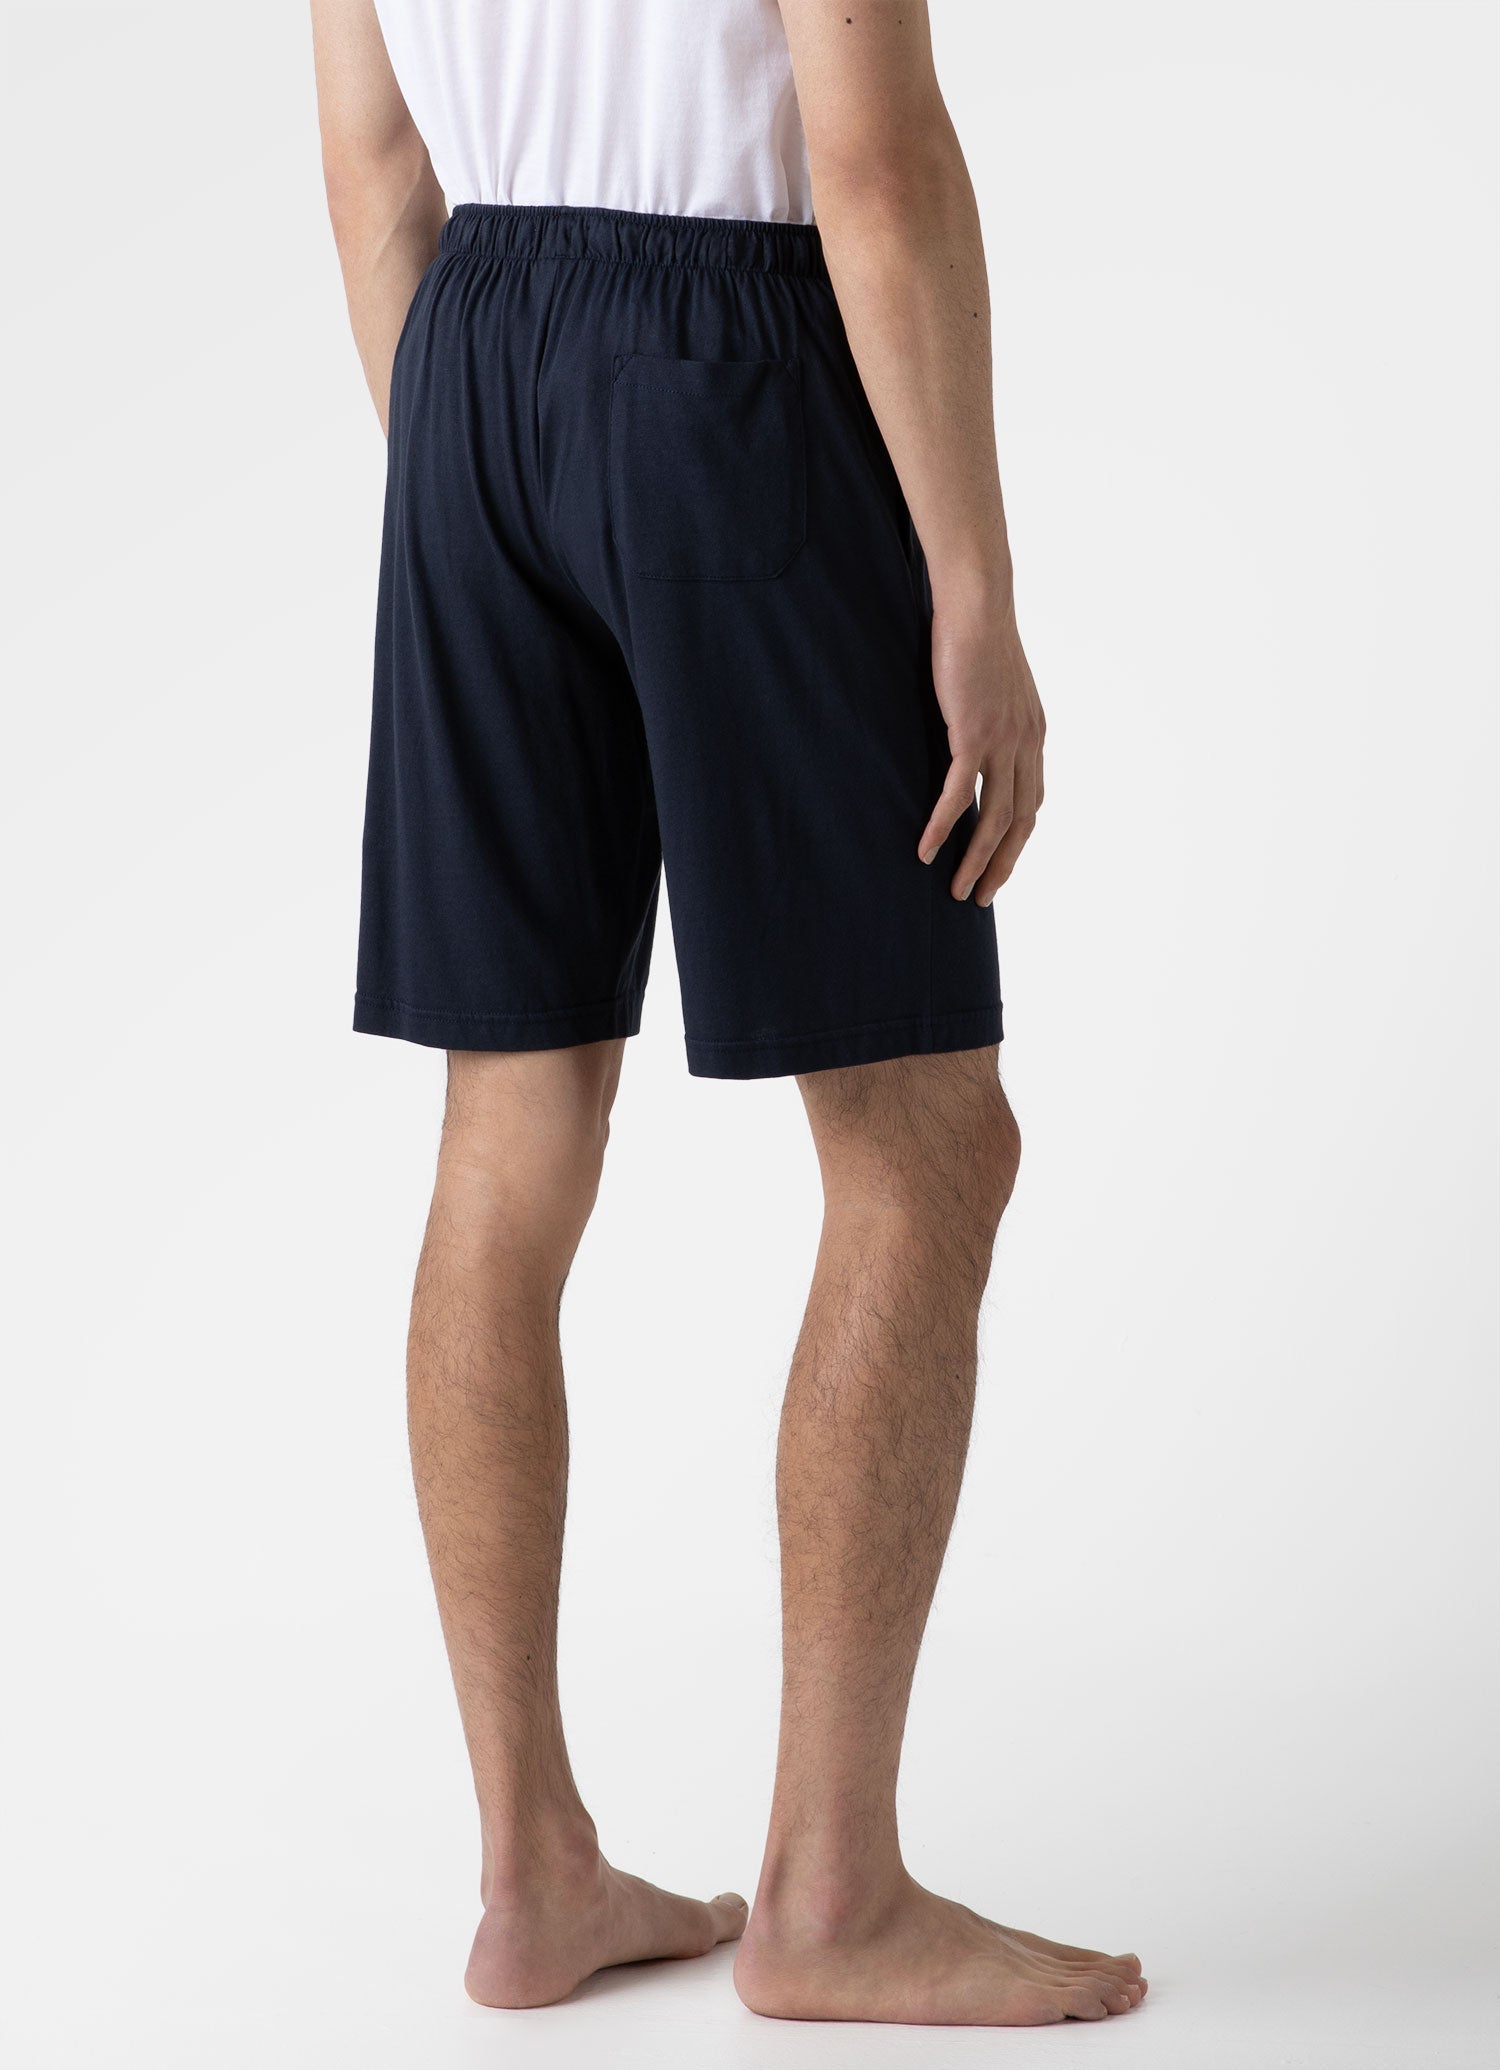 Men's Cotton Modal Lounge Shorts in Navy